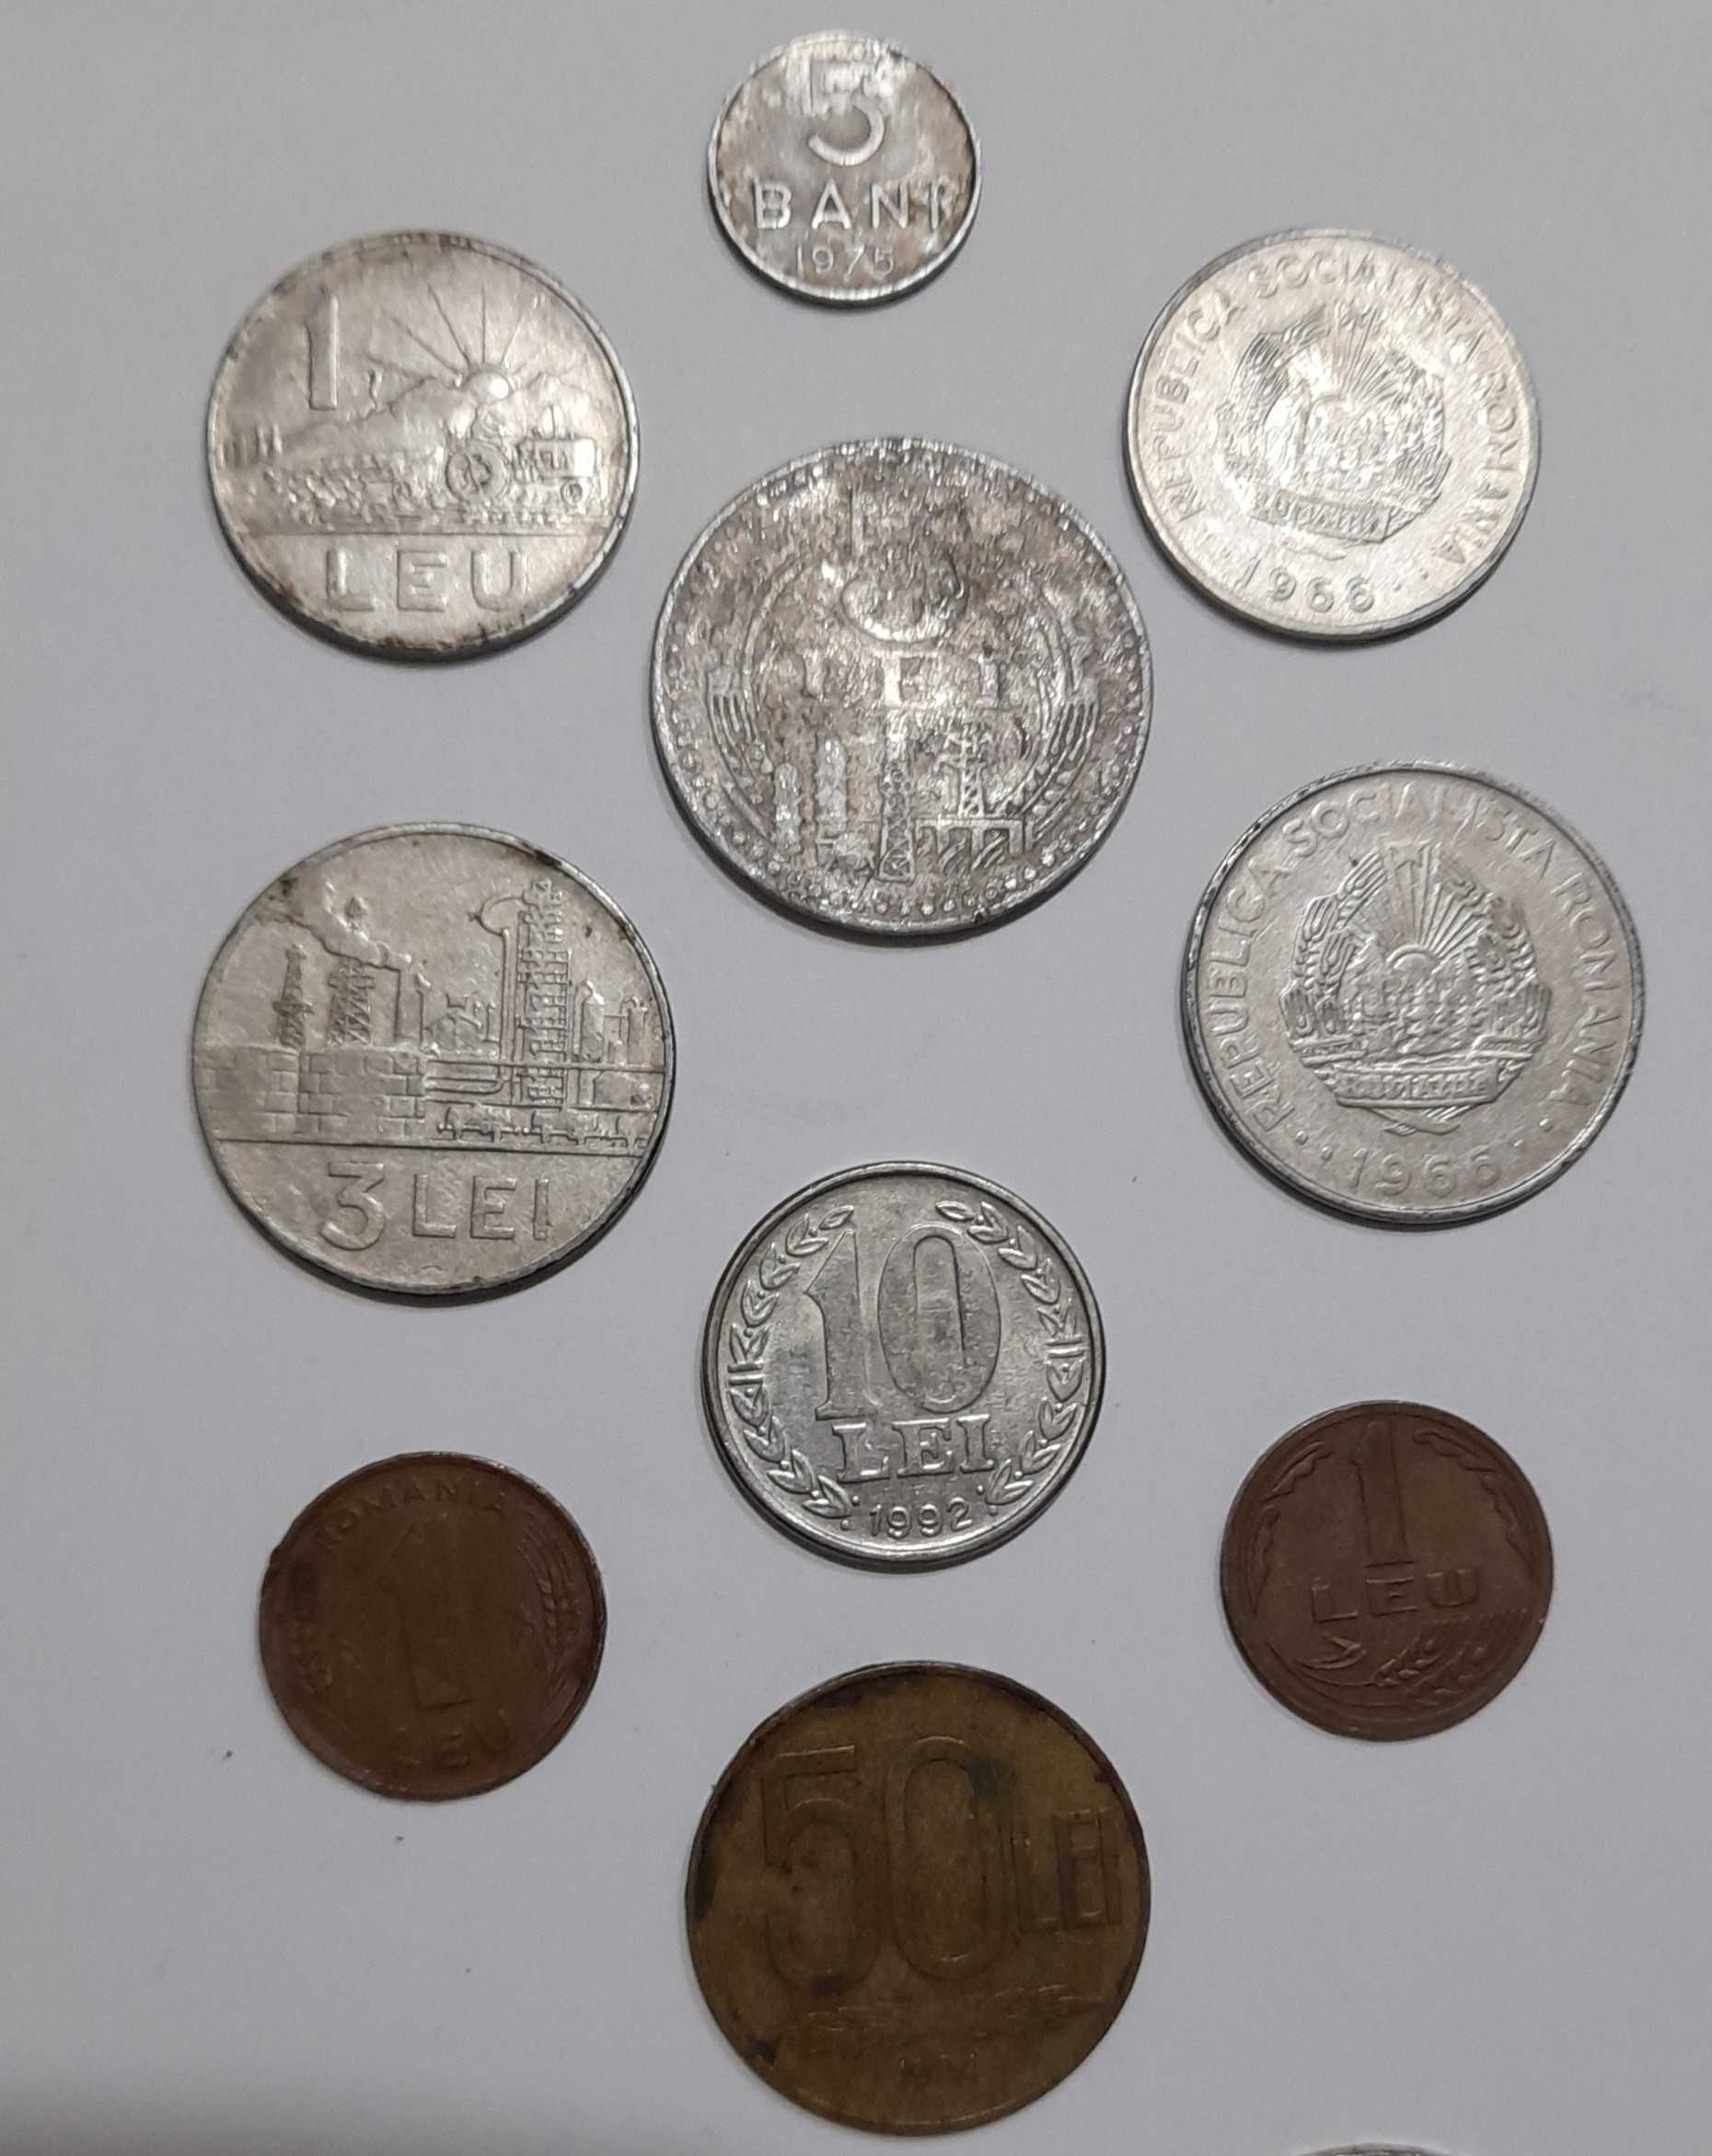 Colecție bani vechi românești